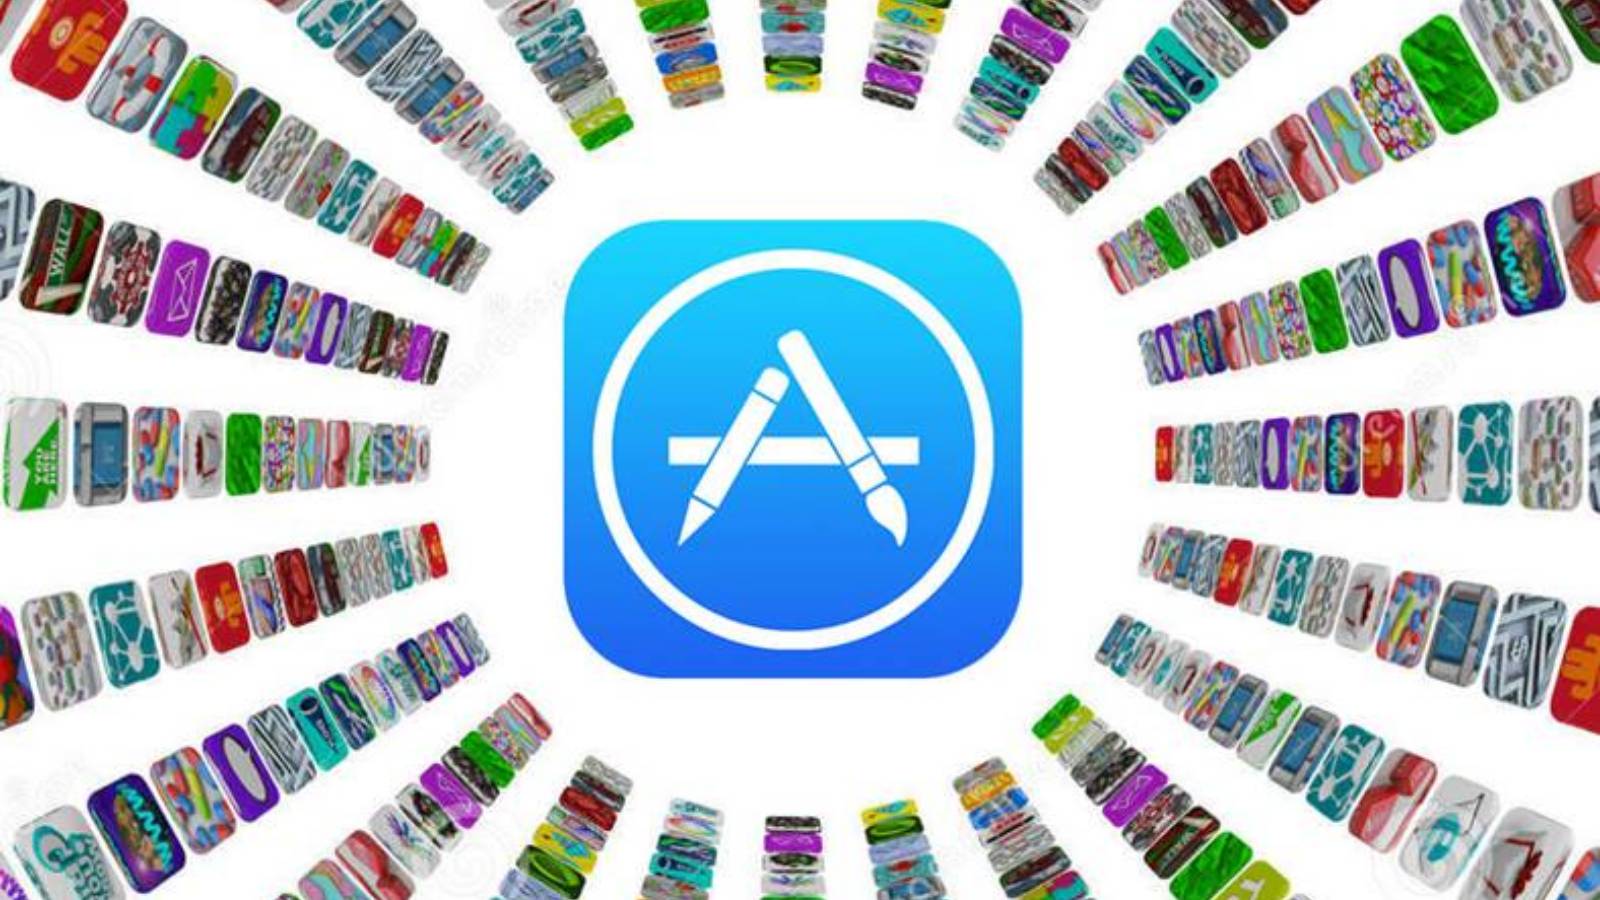 Avviso Apple Store di terze parti Applicazioni iPhone iPad